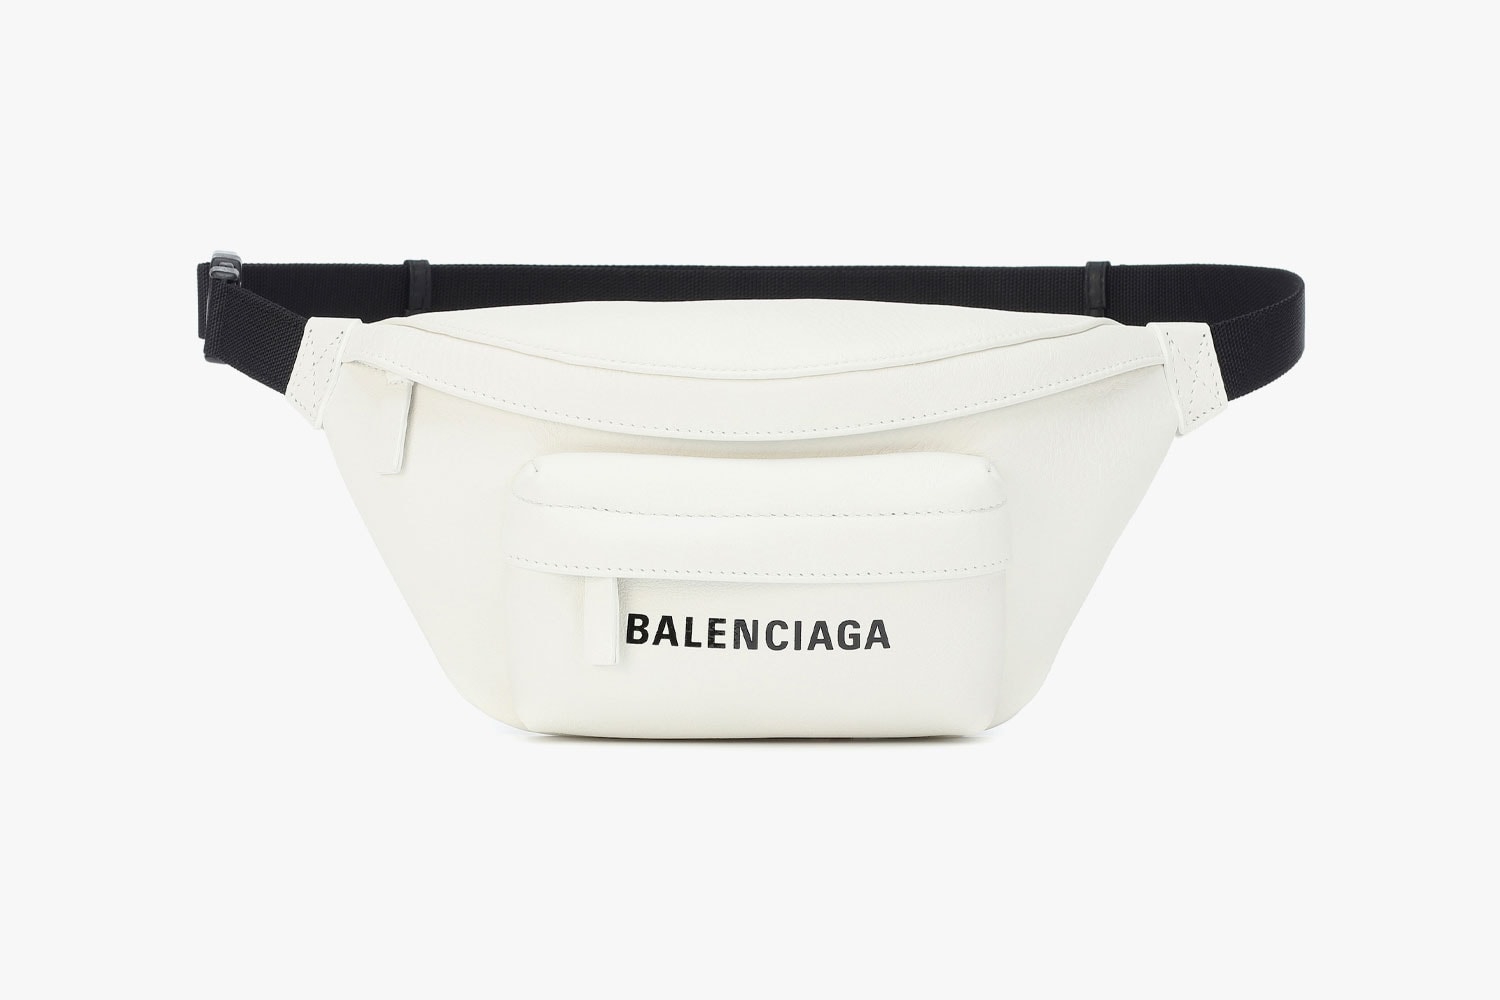 balenciaga logo belt bag white leather fanny pack designer purses